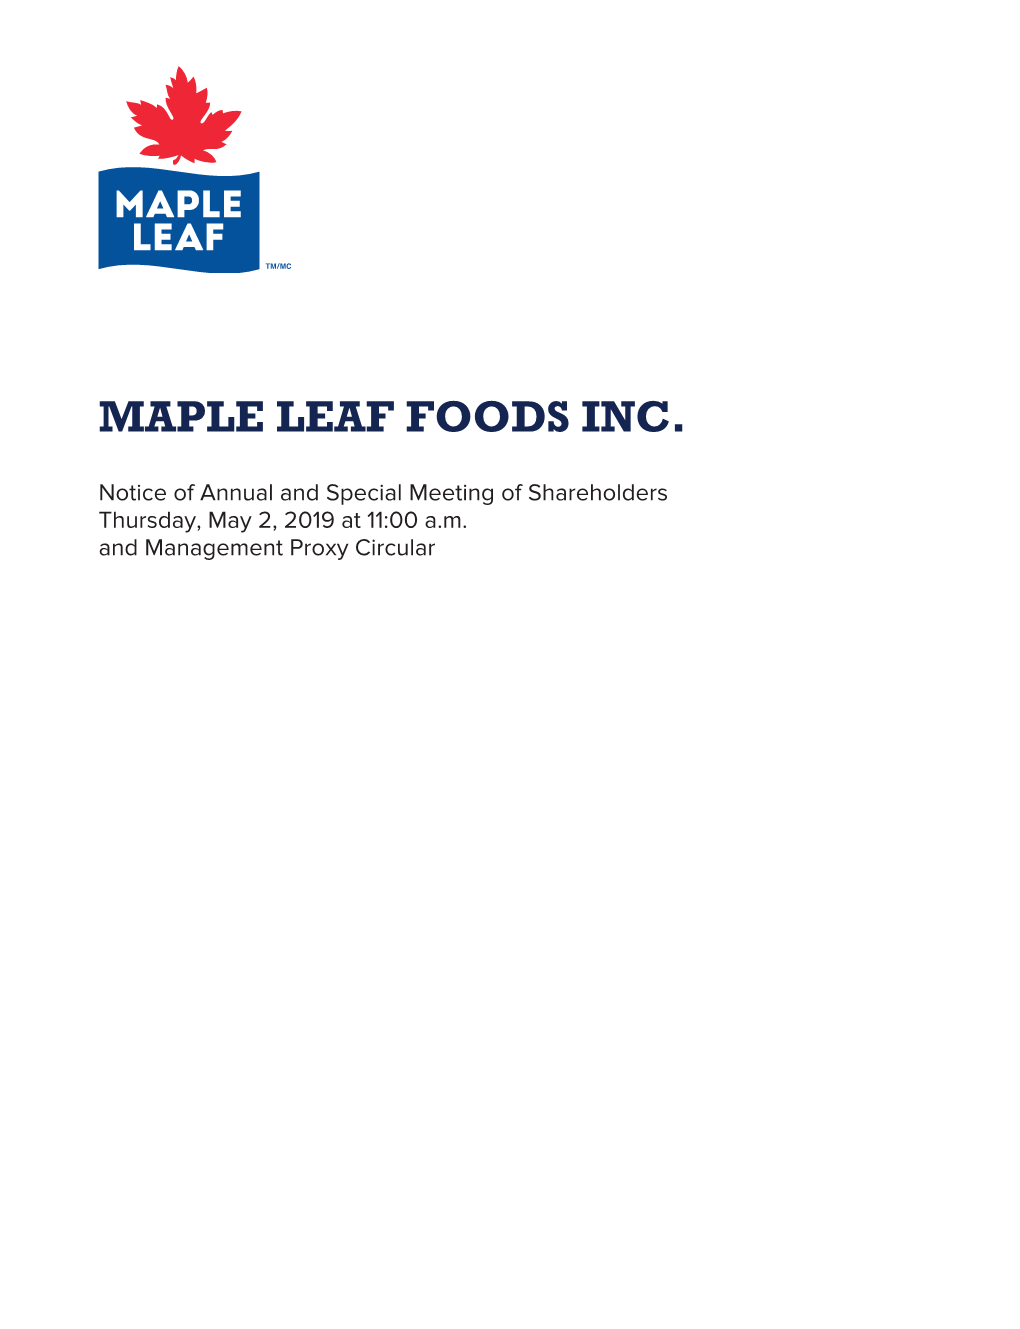 Maple Leaf Foods 2019 Management Proxy Circular